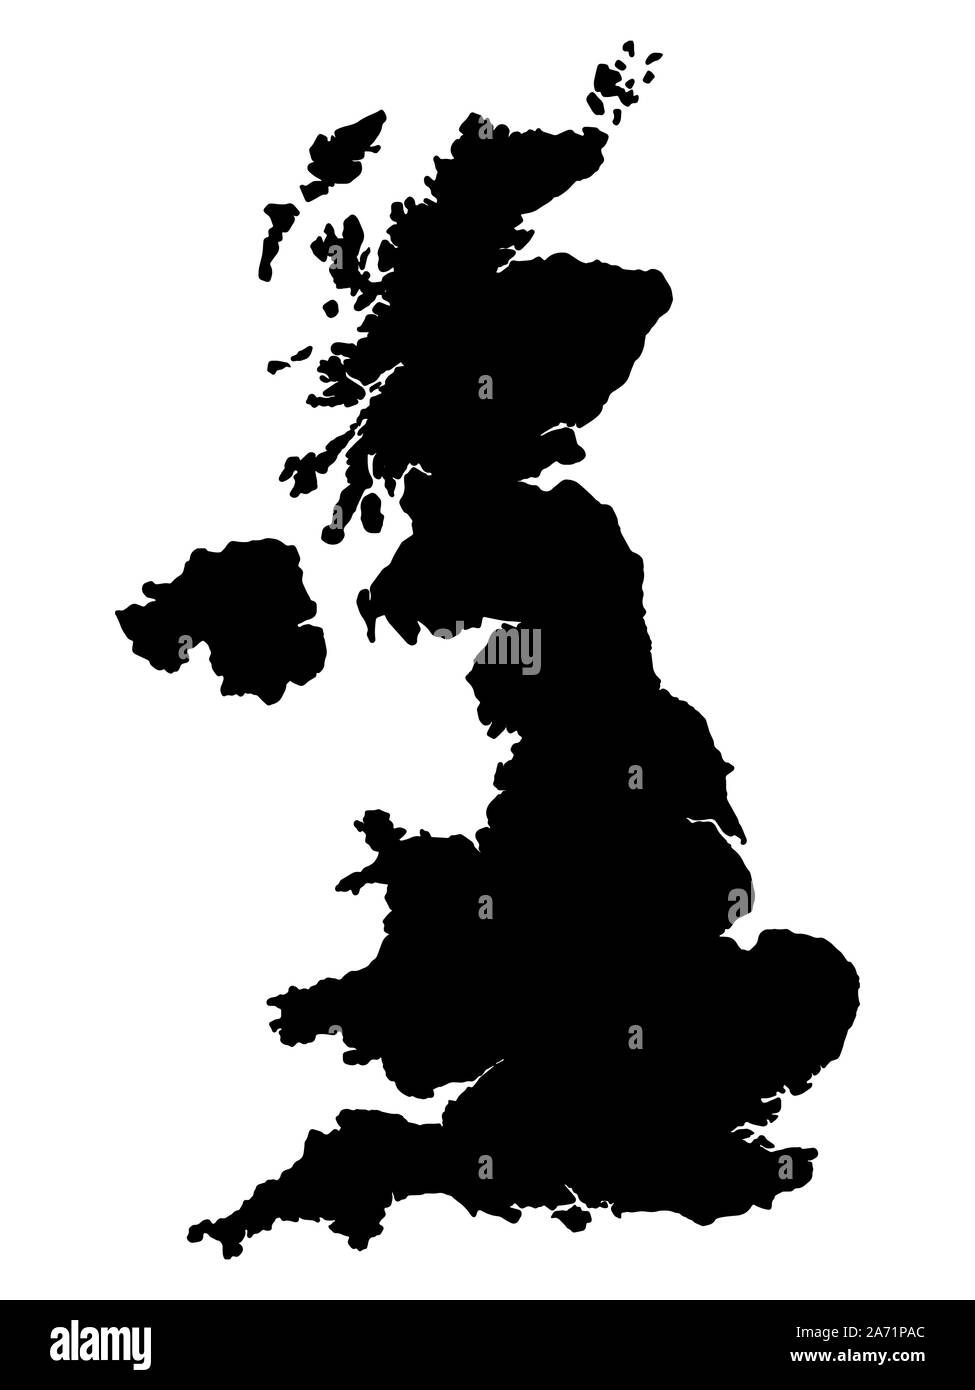 United Kingdom Map Vector illustration eps 10. Stock Vector